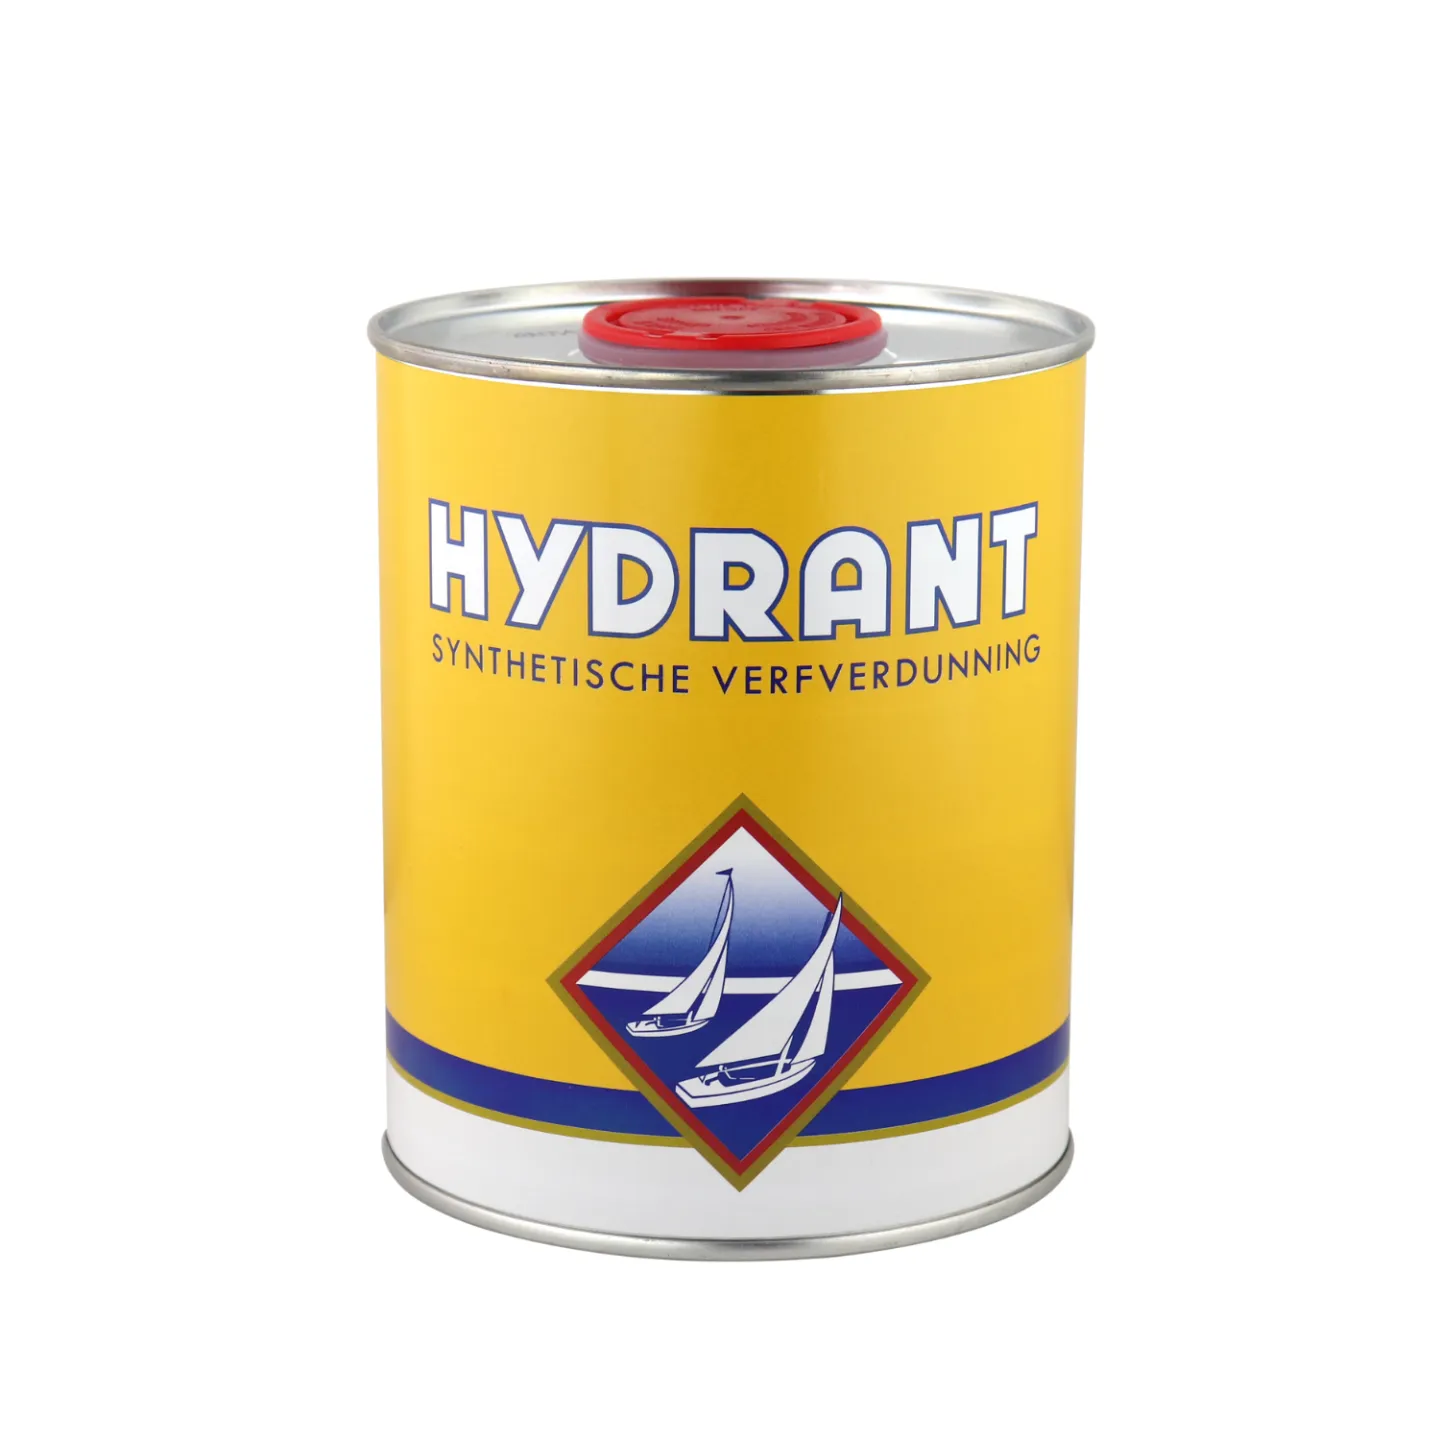 Hydrant synthetische verfverdunning2.